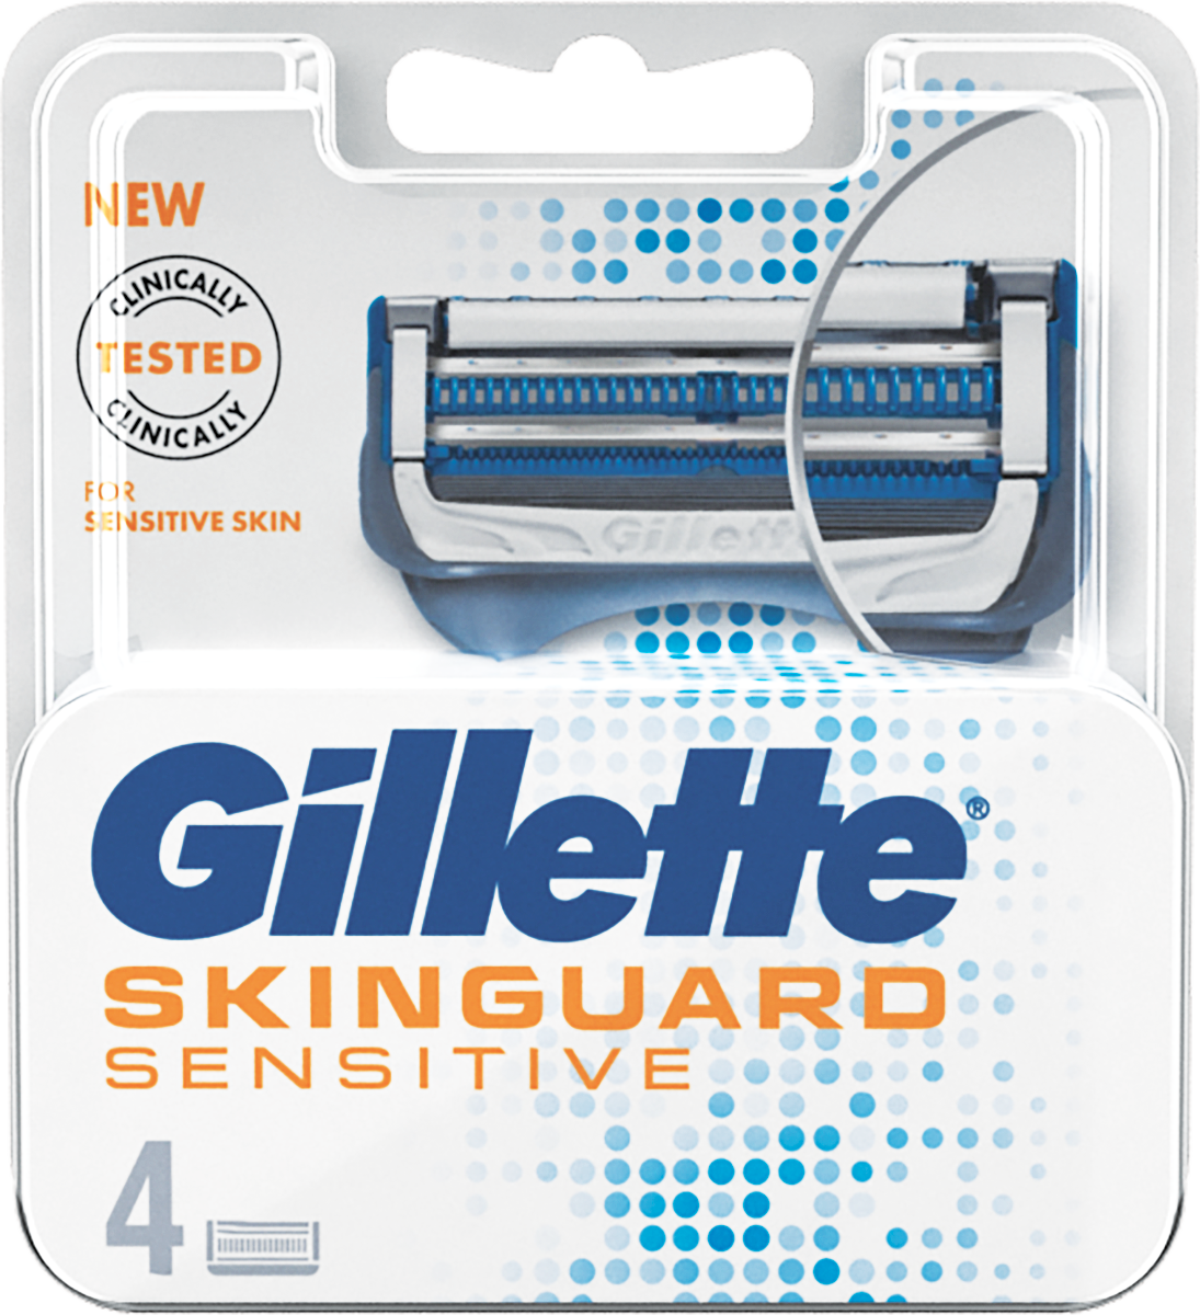 Gillette Skinguard Razor Shaving Congratulations Gift Pack for Men with 4 Cartridge